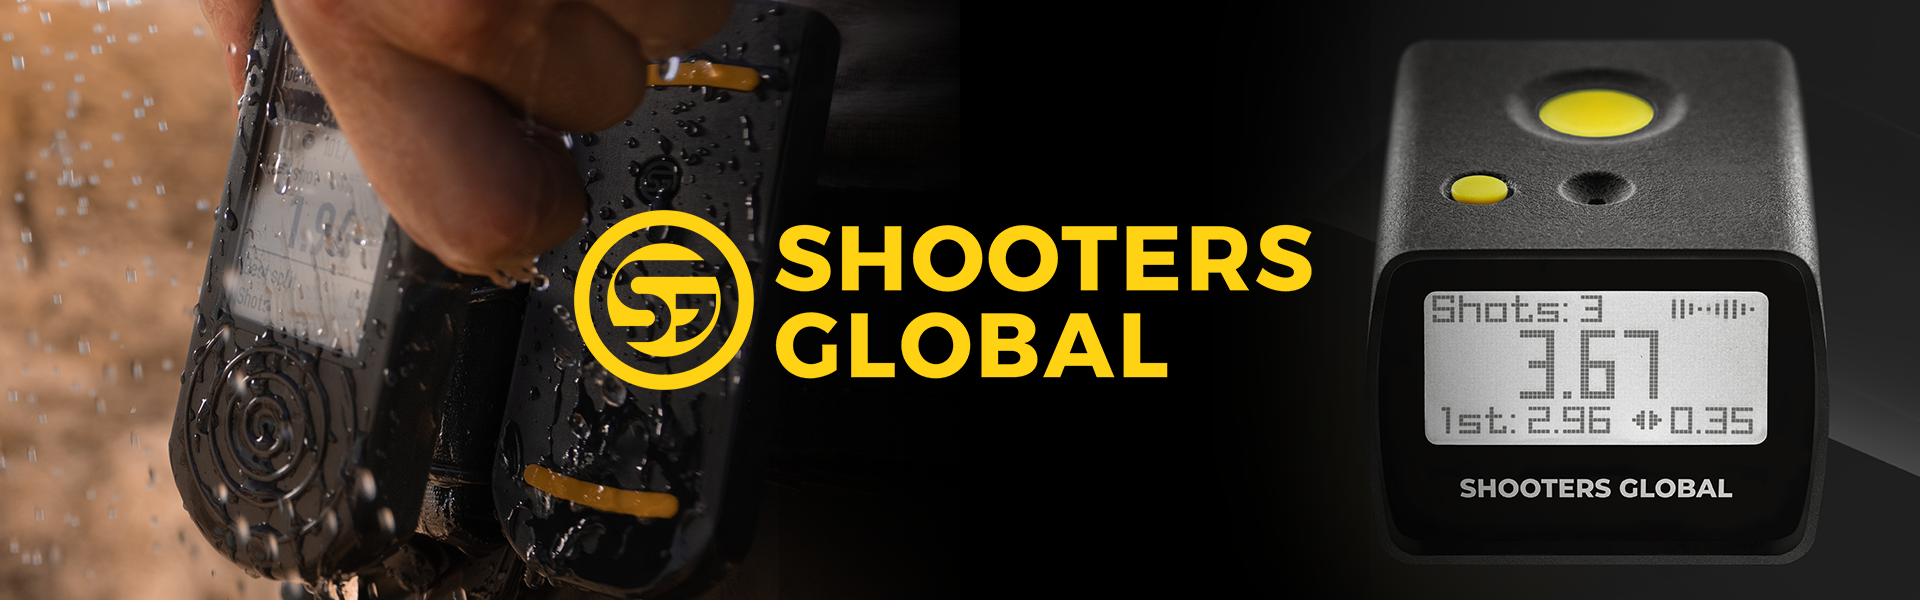 Shooters Global